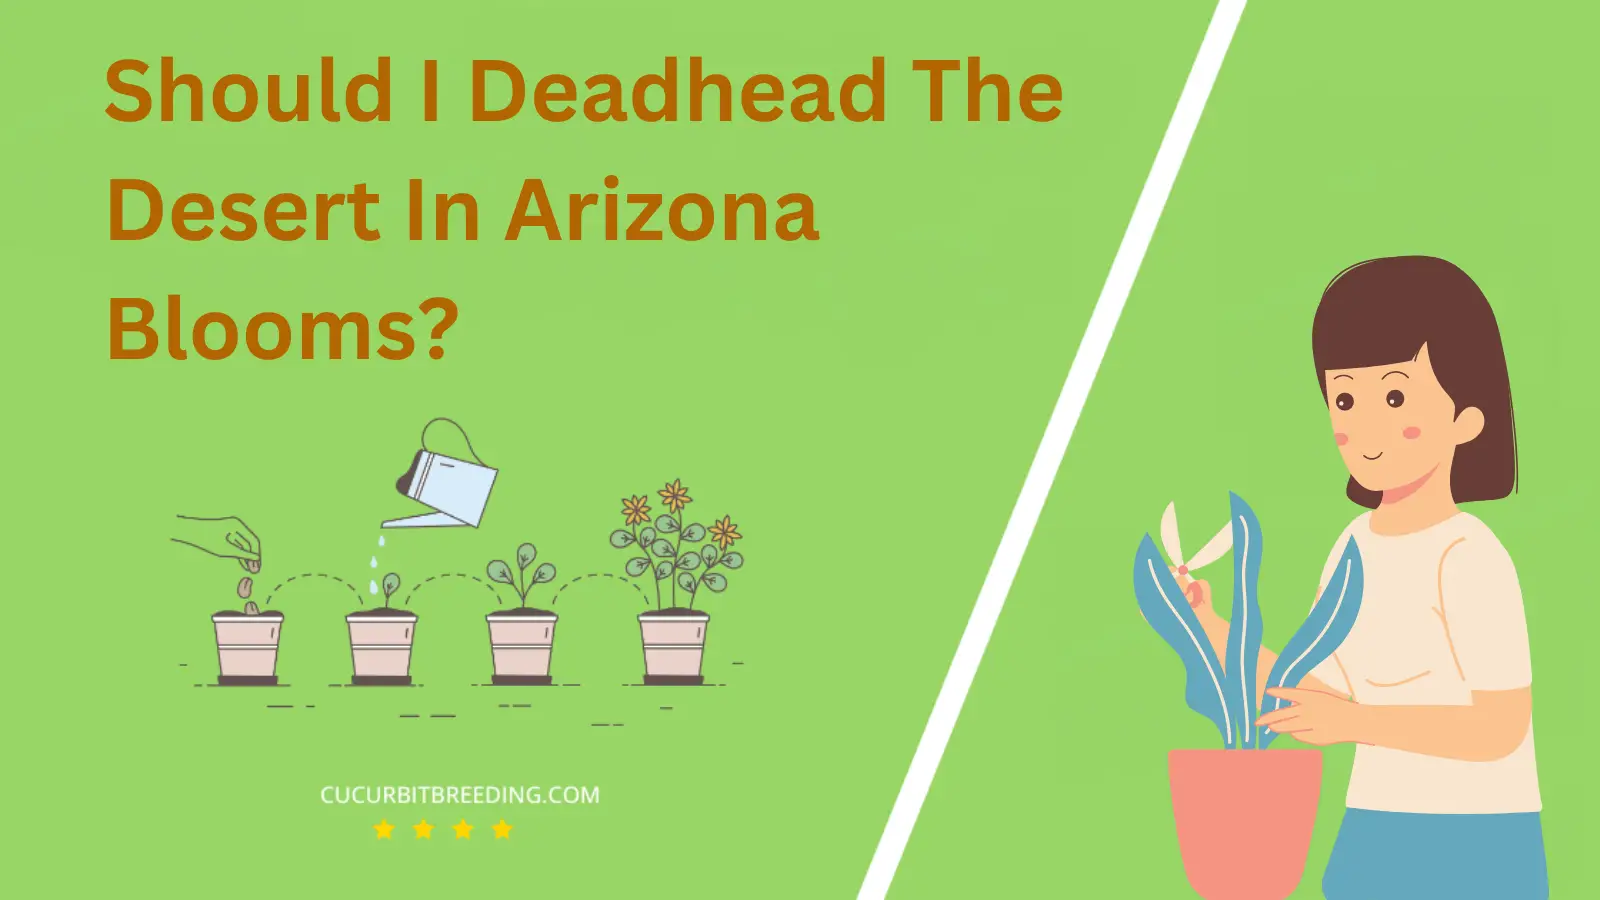 Should I Deadhead The Desert In Arizona Blooms?